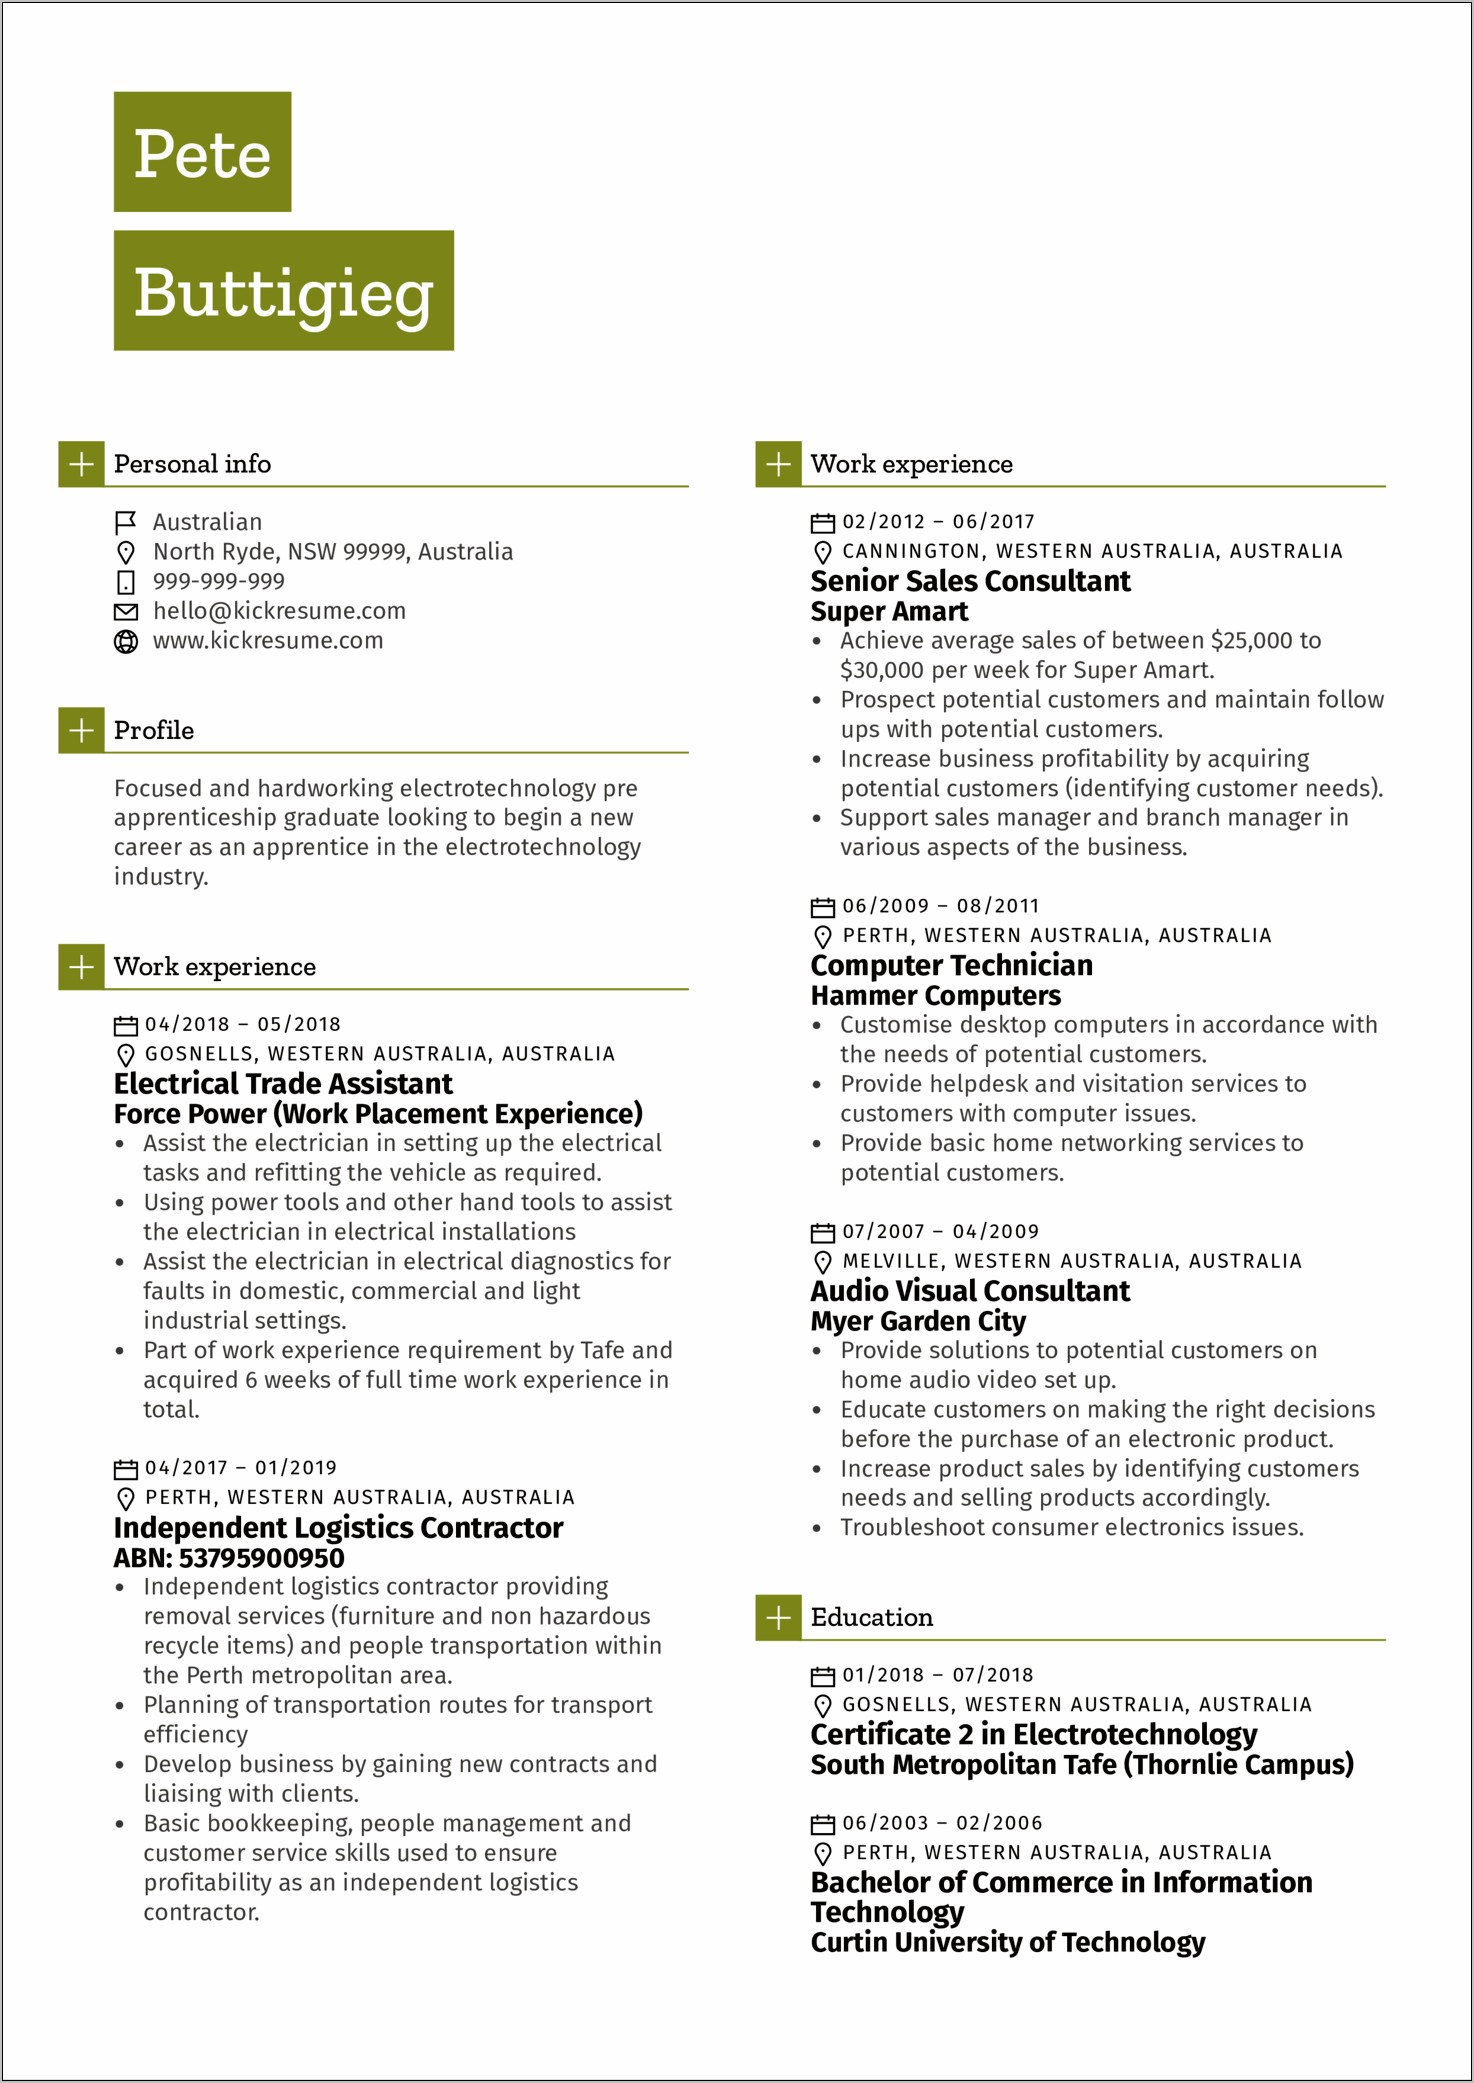 Trade Apprentice Job Description Resume